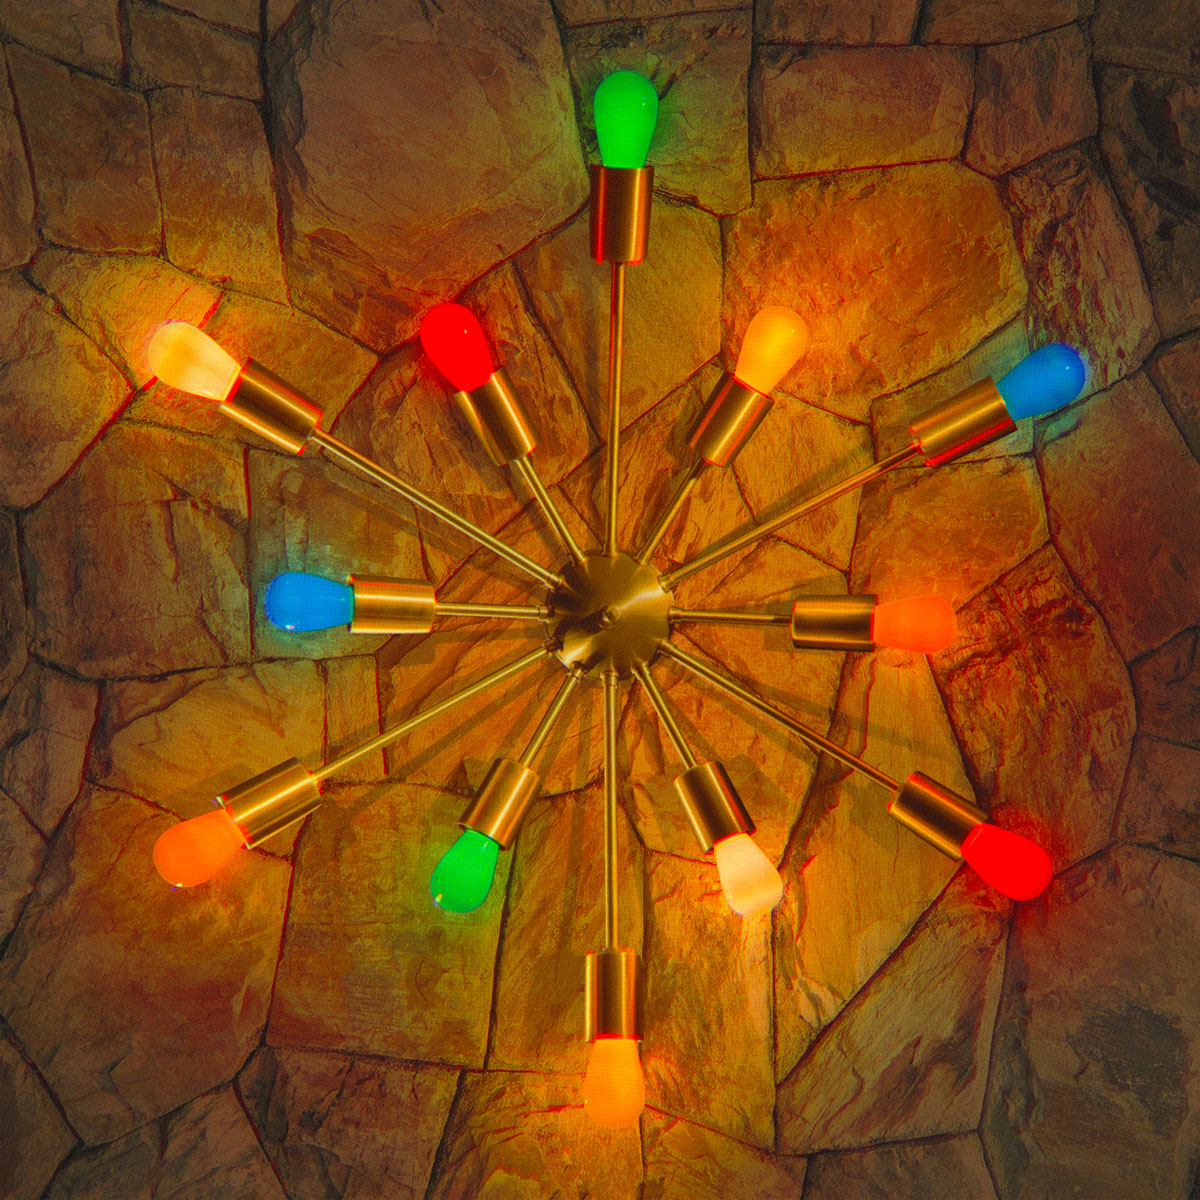 Colorful Tru-Tone S14 light bulbs in a mid-century Sputnik style brass light fixture on a stone wall